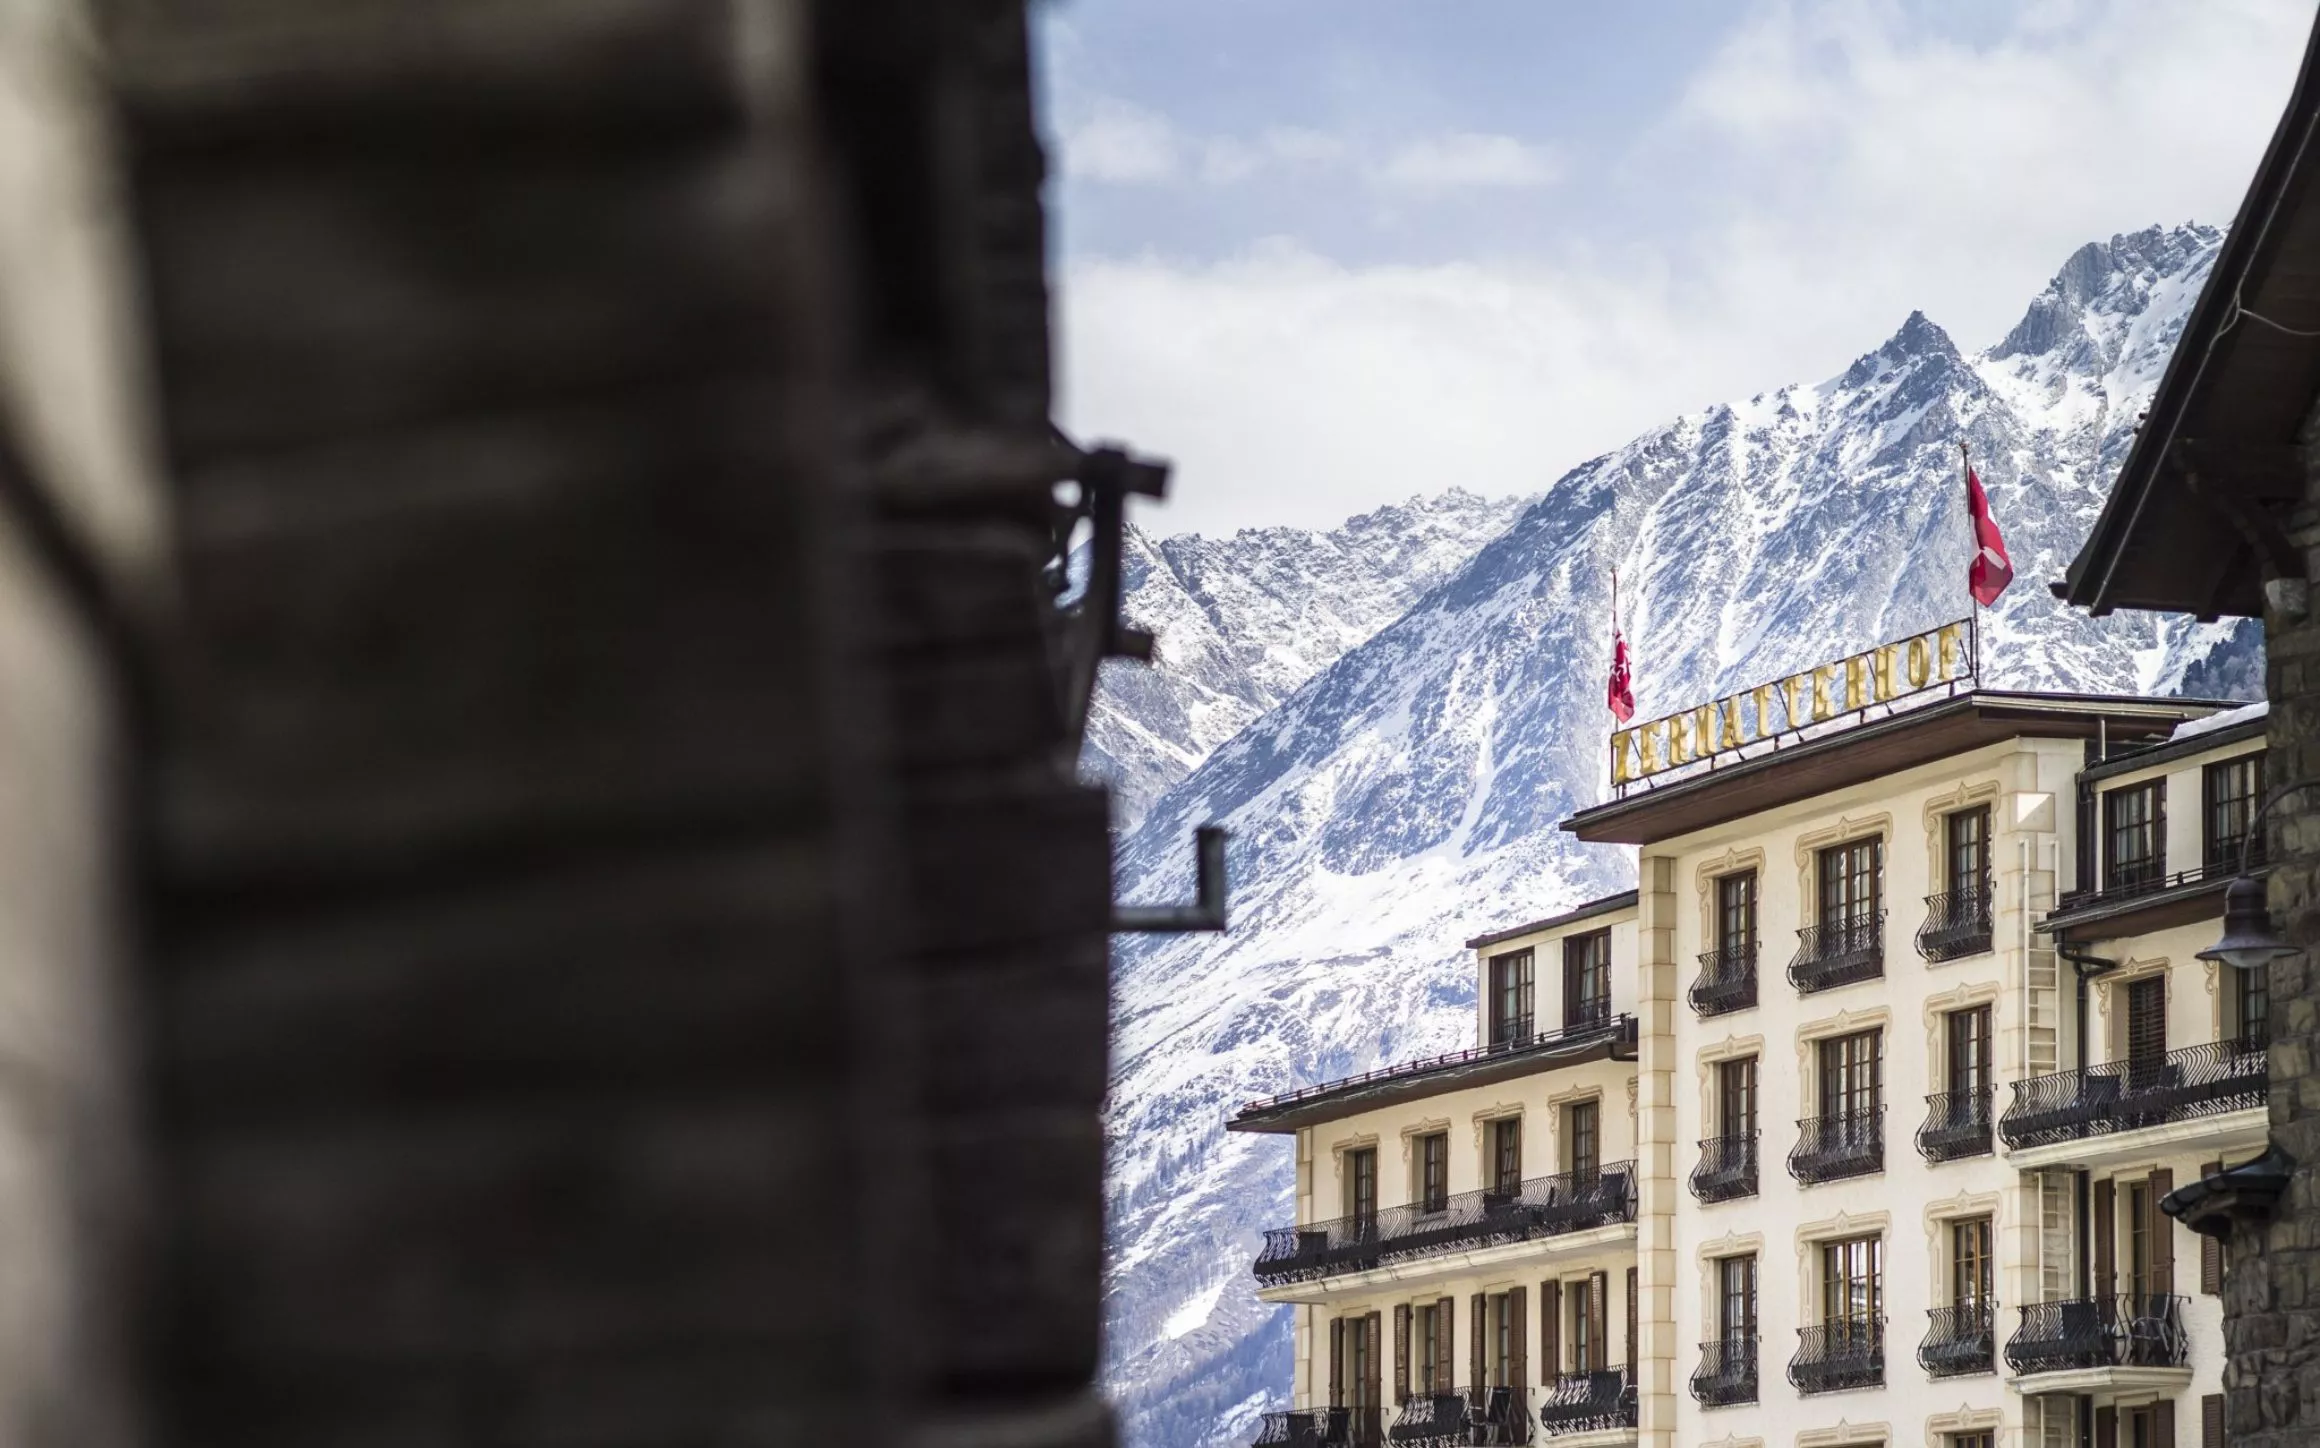 Grand Hotel Zermatterhof 5*